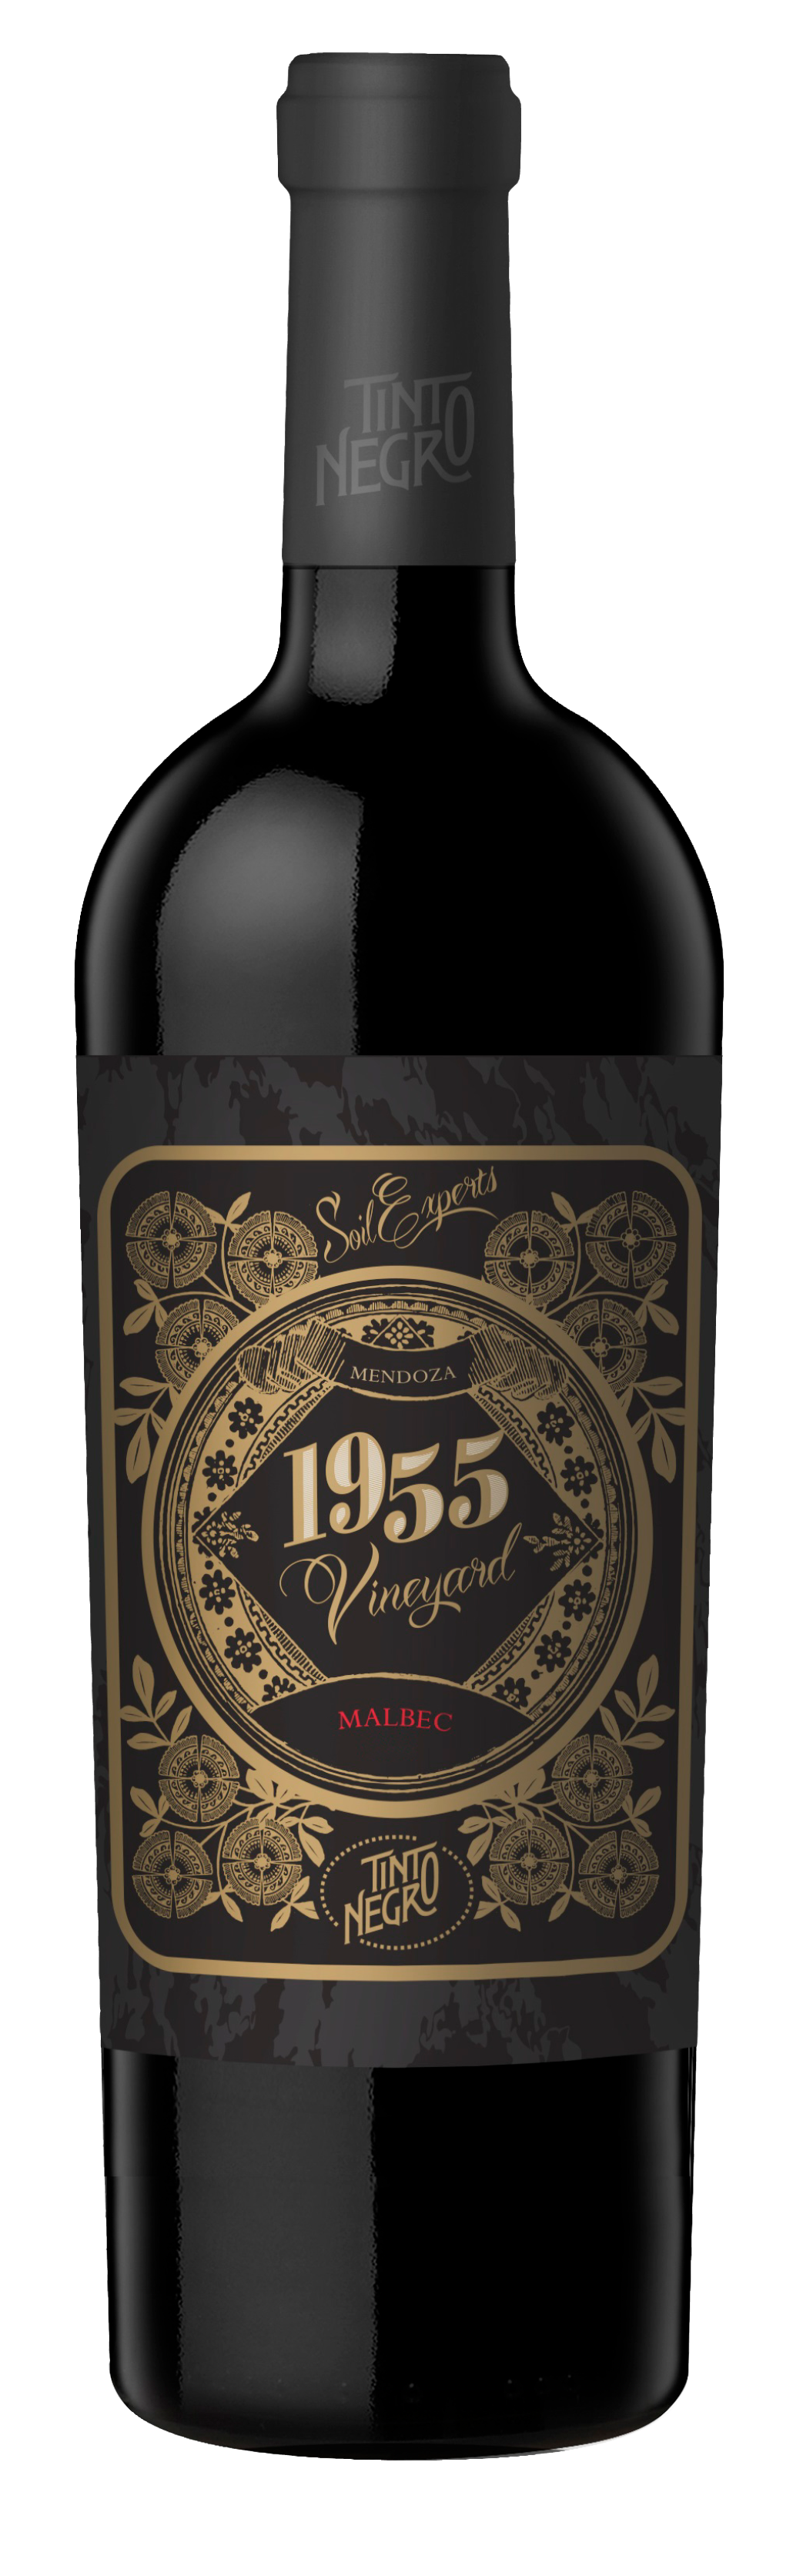 TintoNegro<br />2015 Vineyard 1955 Malbec, 1.5 L<br>Argentina